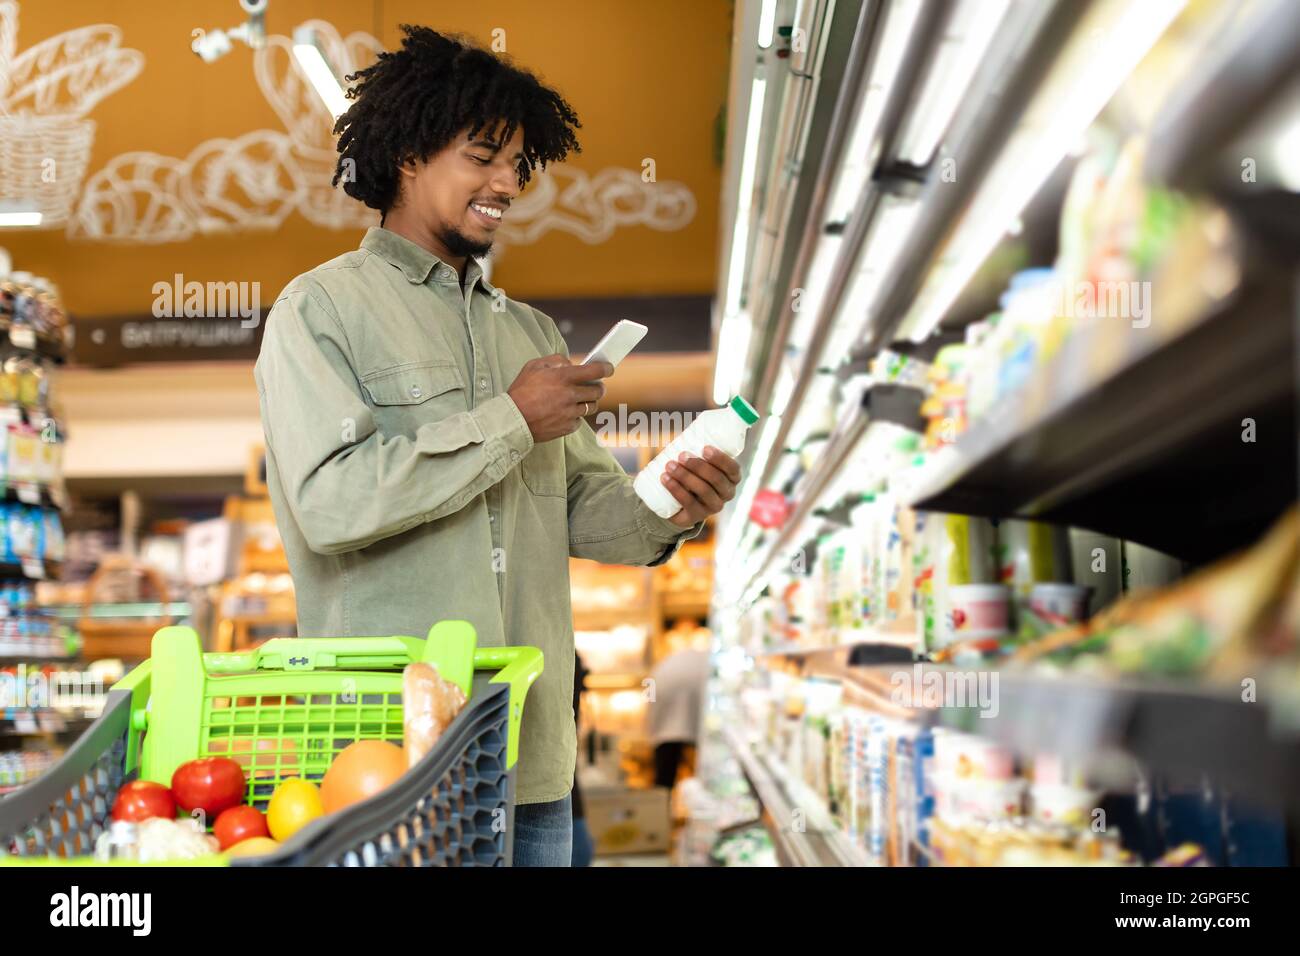 Black Guy Scanning Milk With Smartphone Buying Food In Supermarket